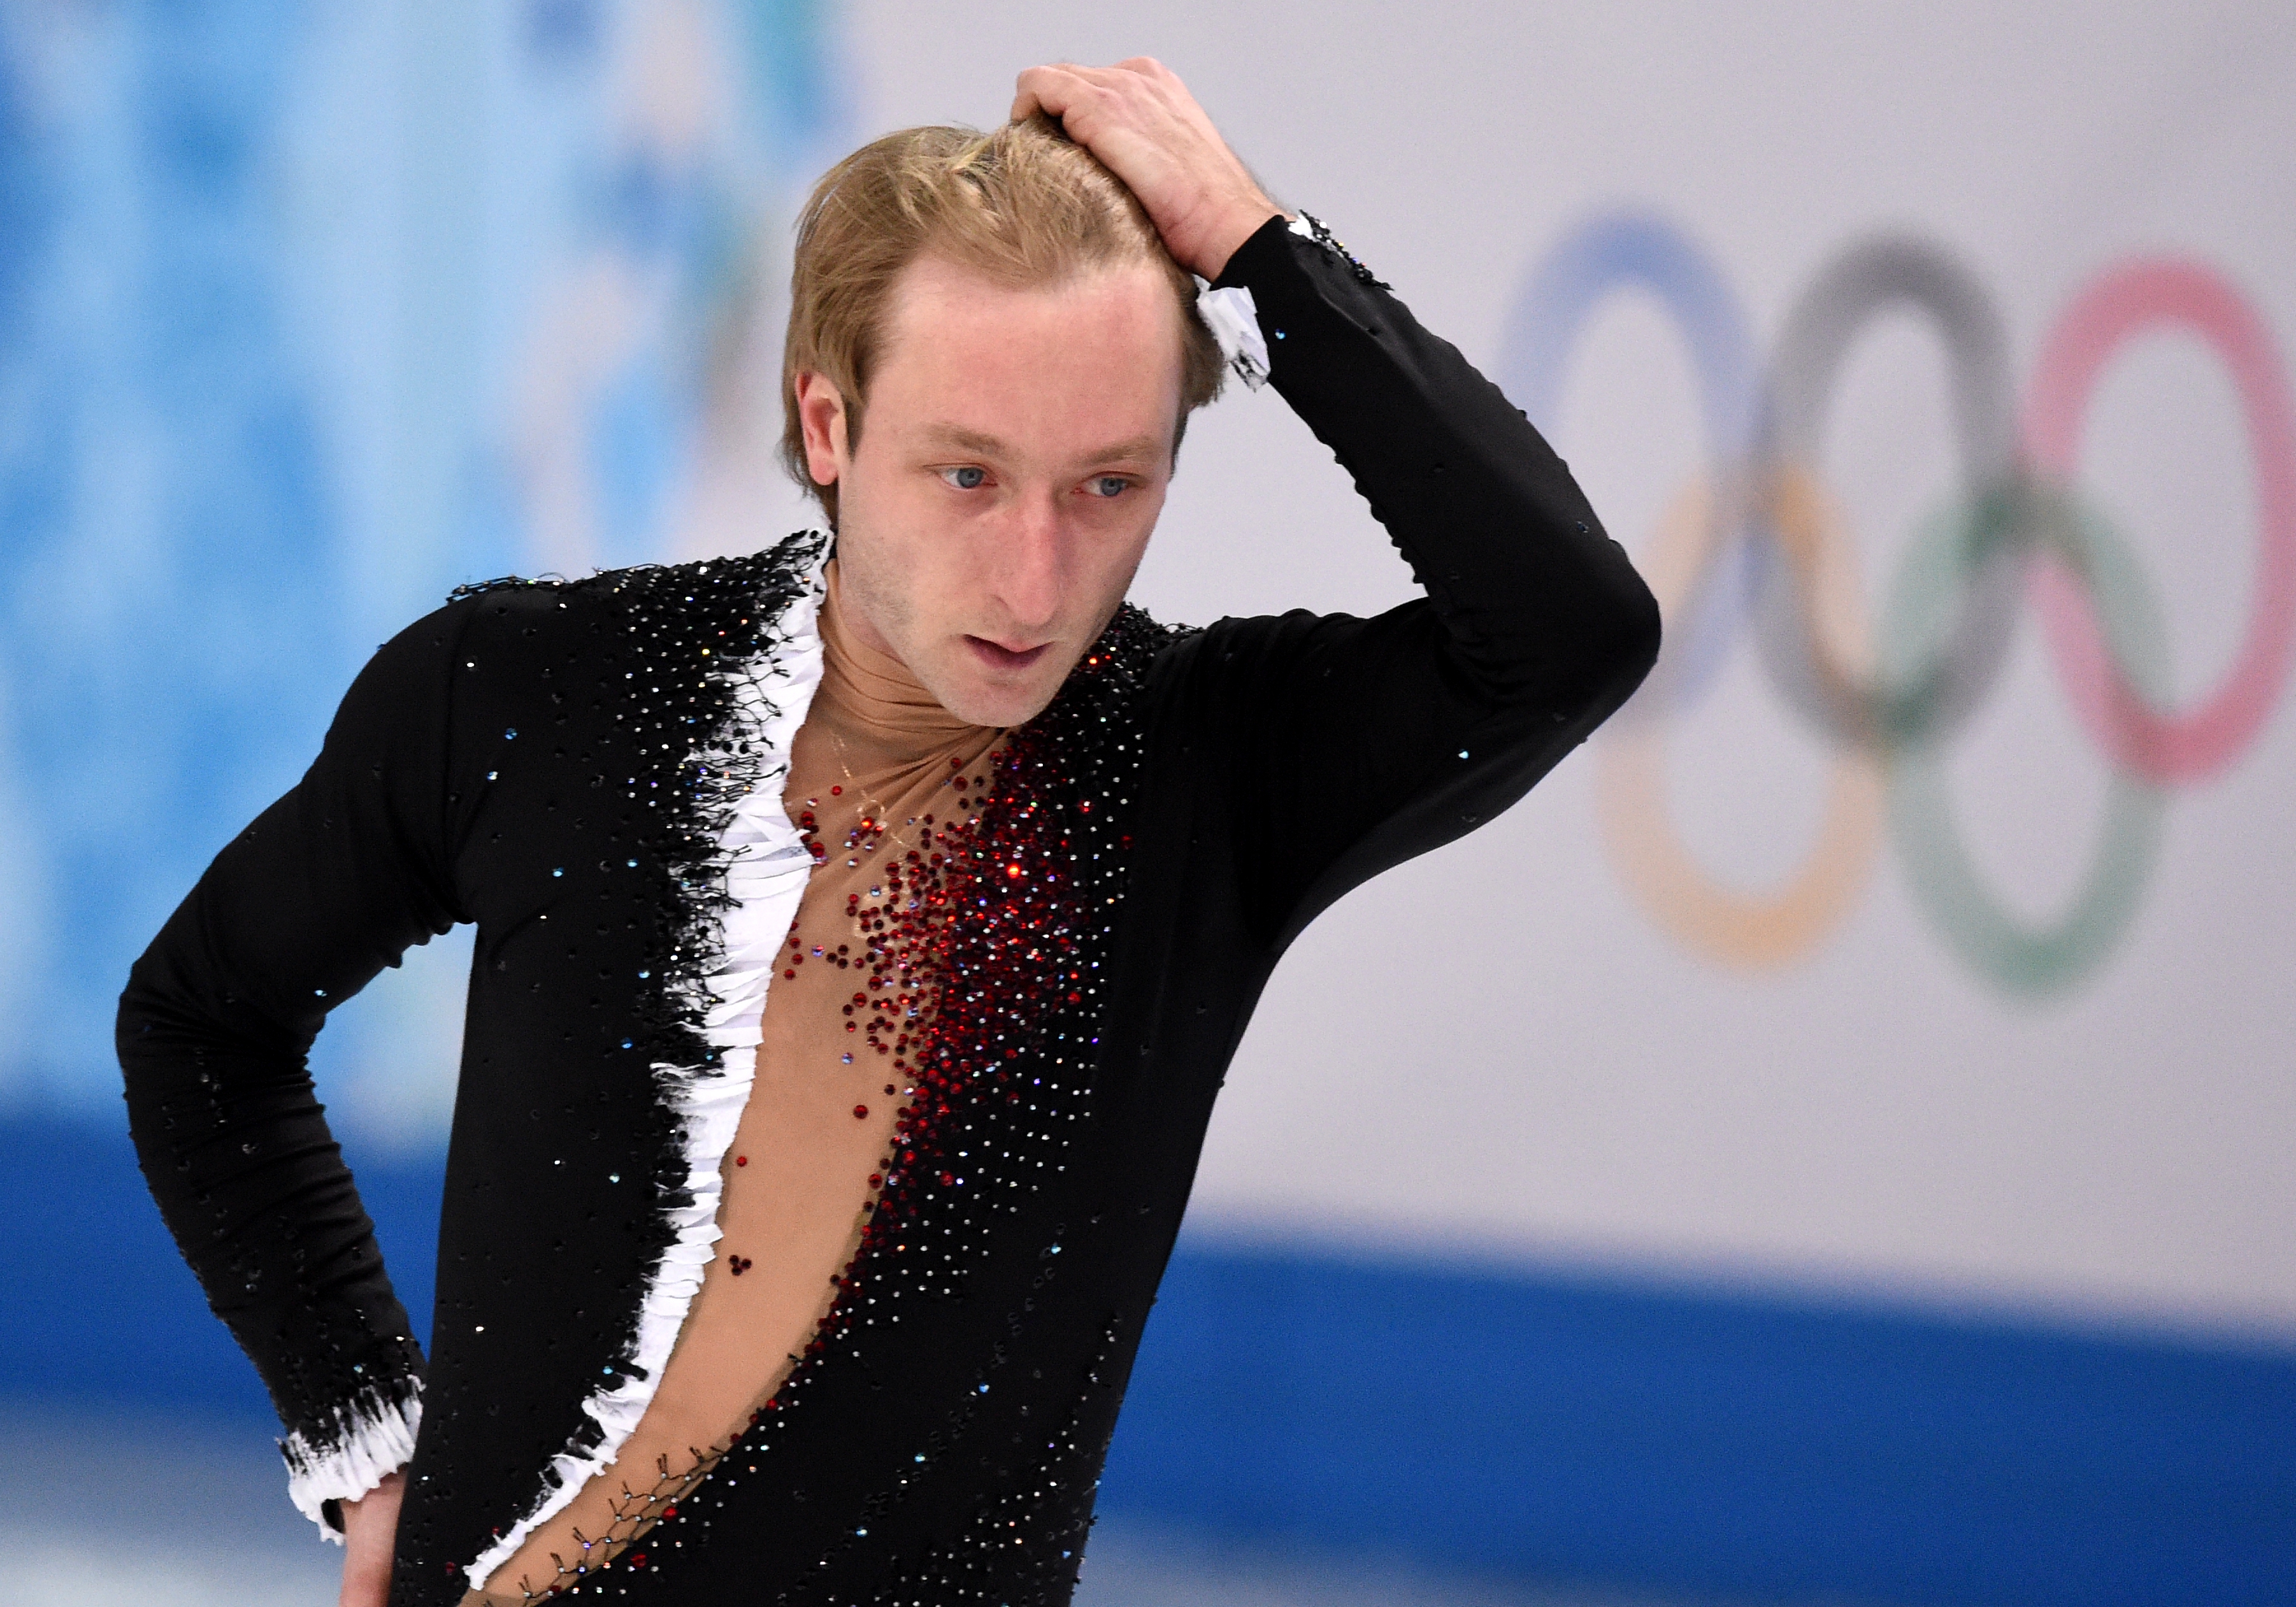 Russian Figure Skater Evgeni Plushenko The Gold Medal In